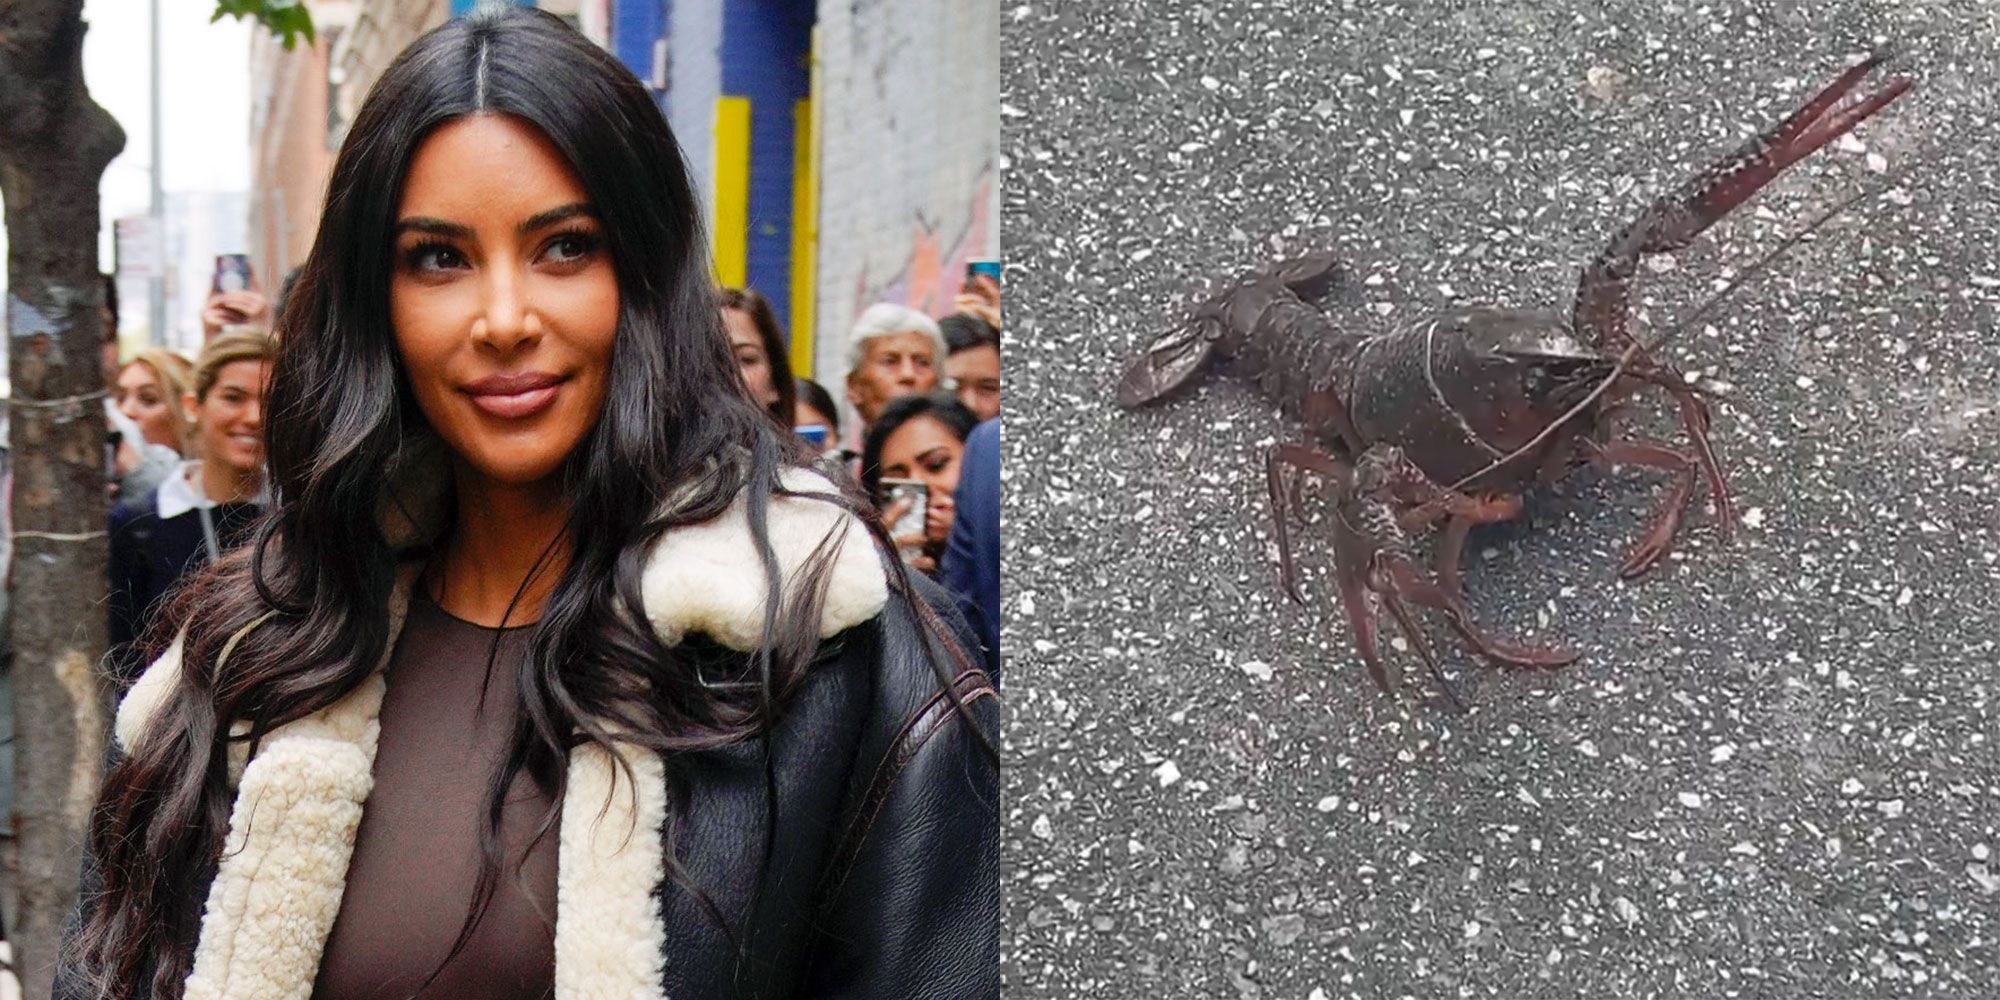 Kim Kardashian and the lobster she saw